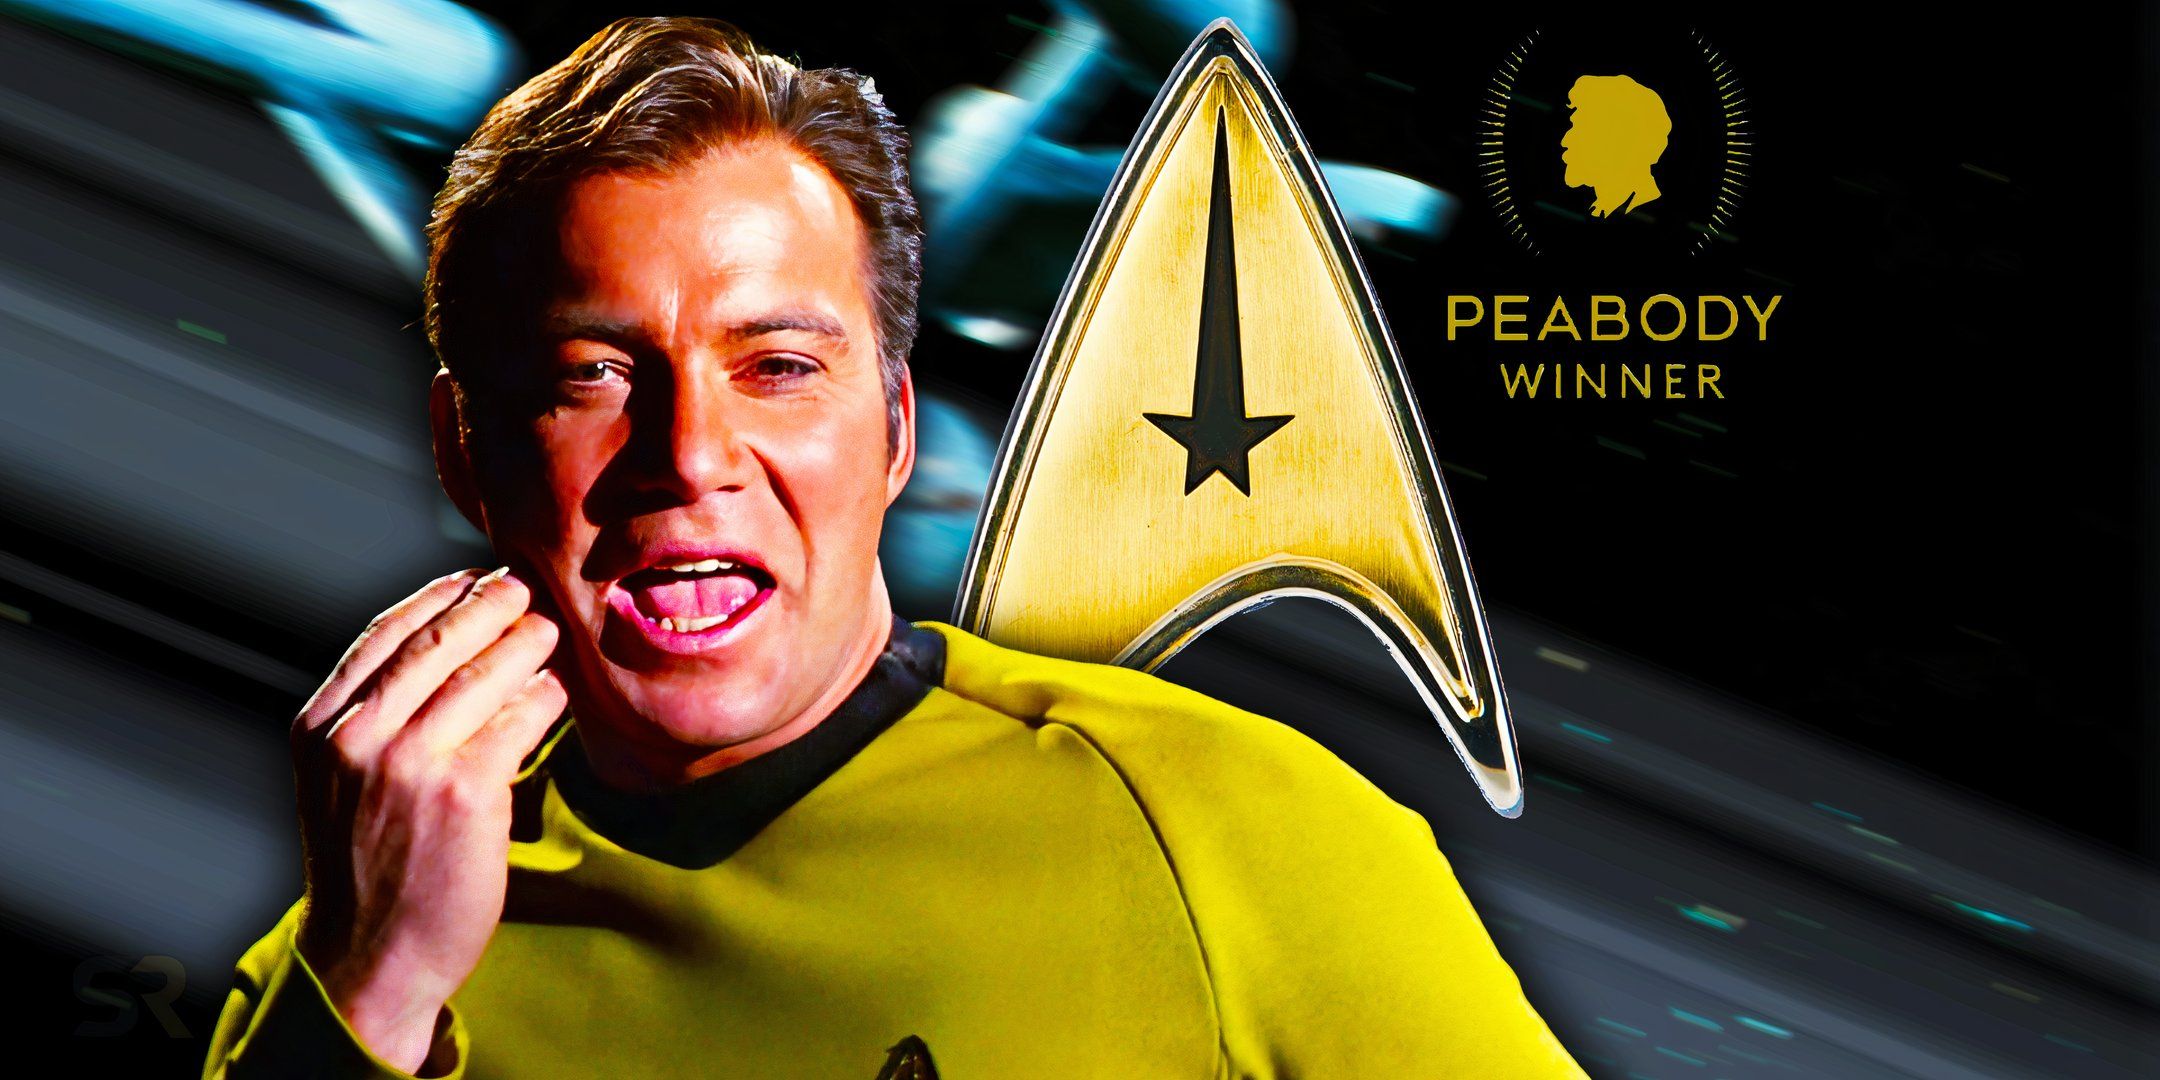 William Shatner being funny as Captain Kirk in front of Star Trek's Peabody Award